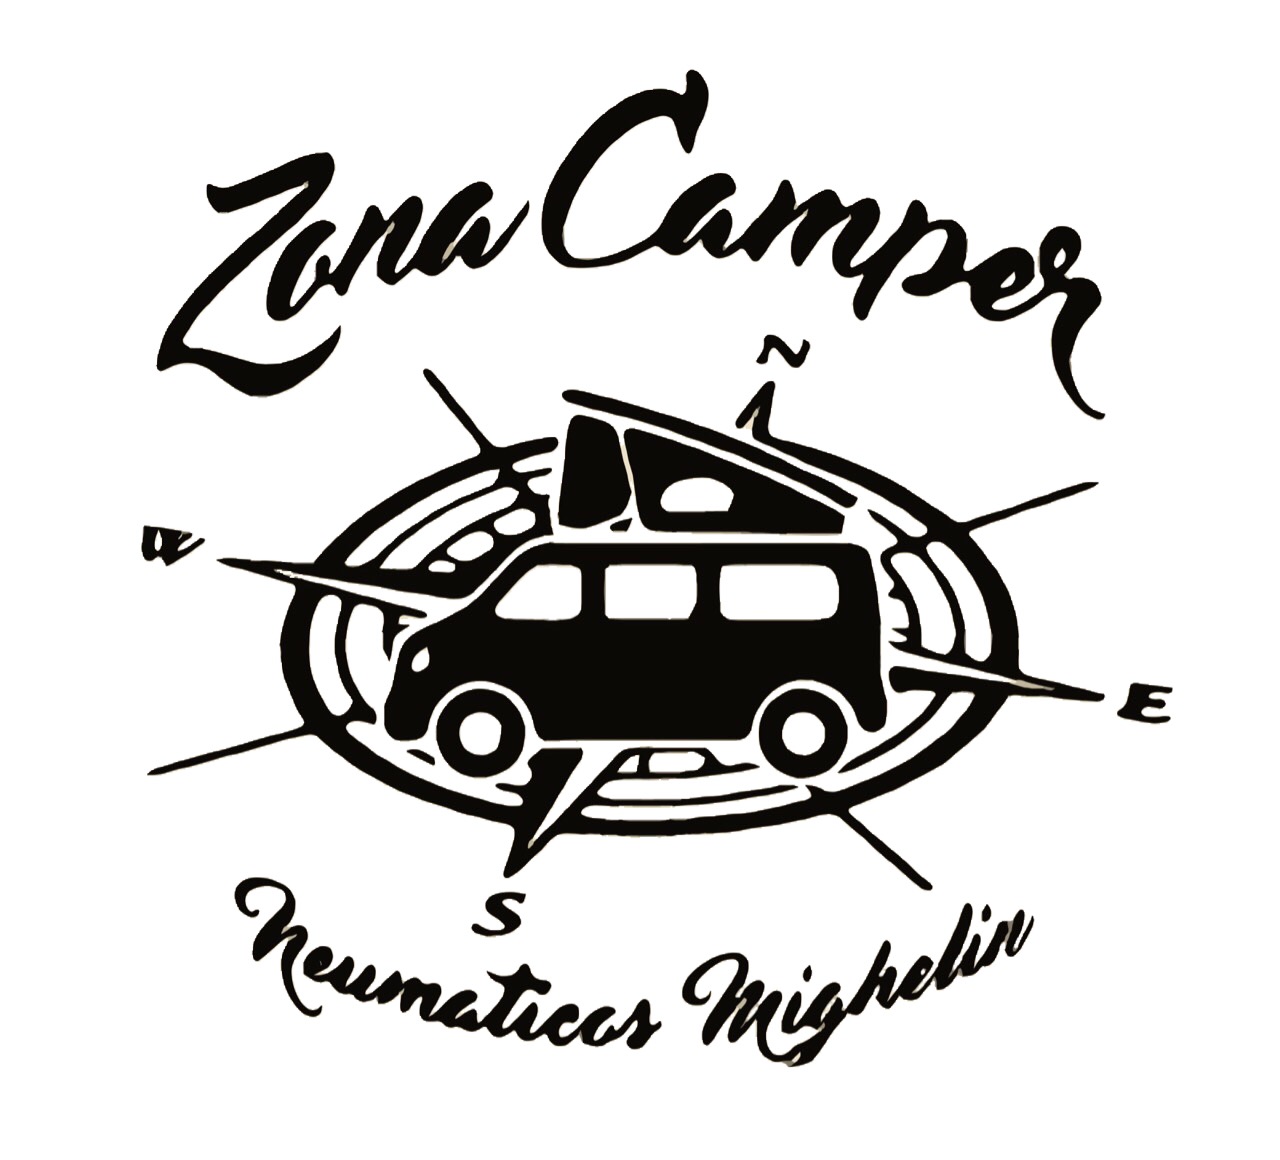 Accesorios Camper, Zona Camper